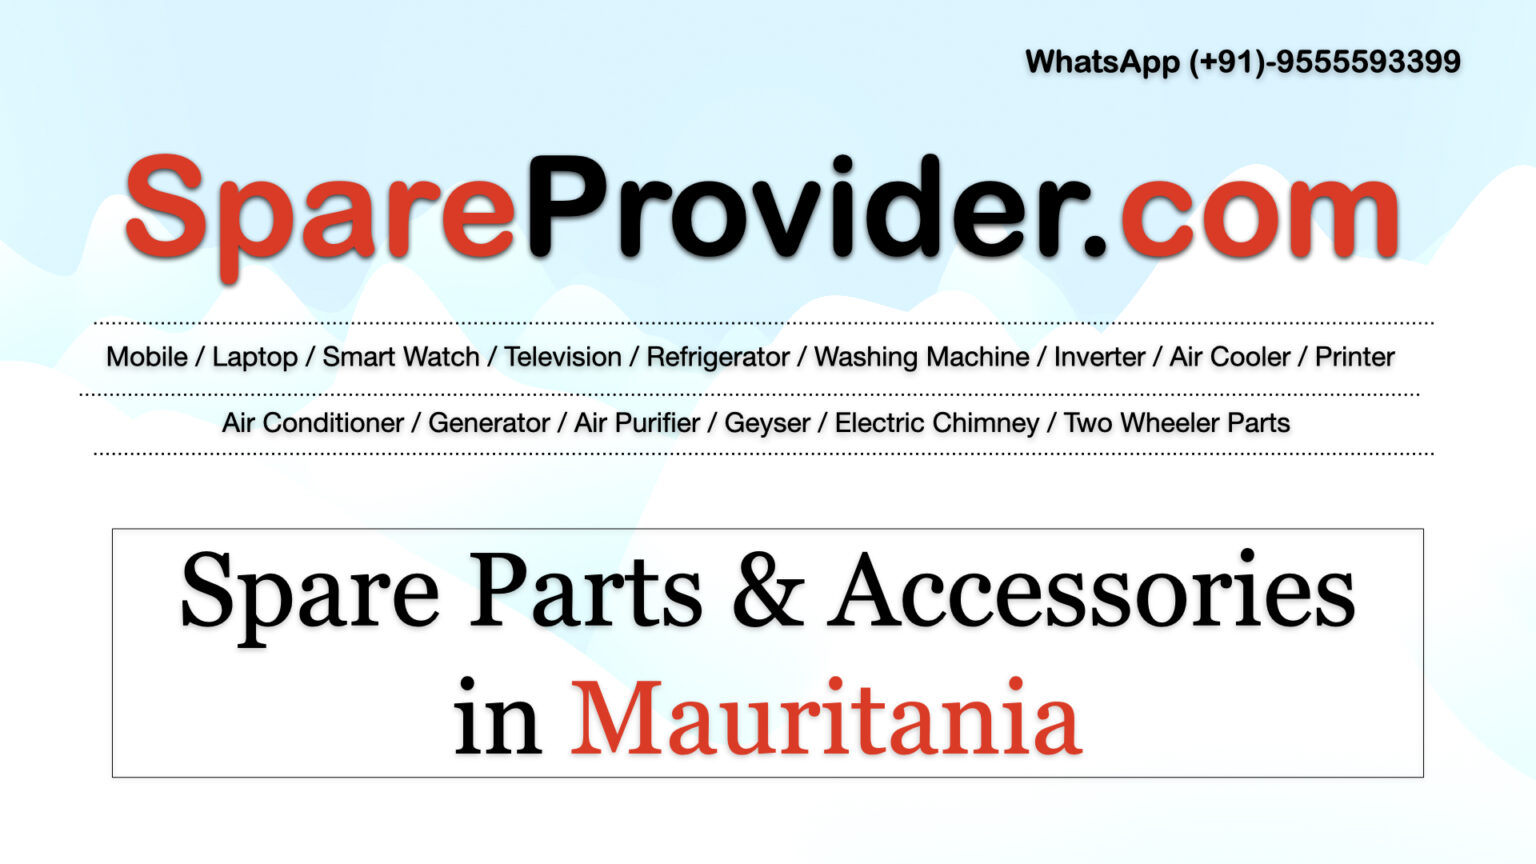 Buy Spare Parts & Accessories in Mauritania - SpareProvider.com